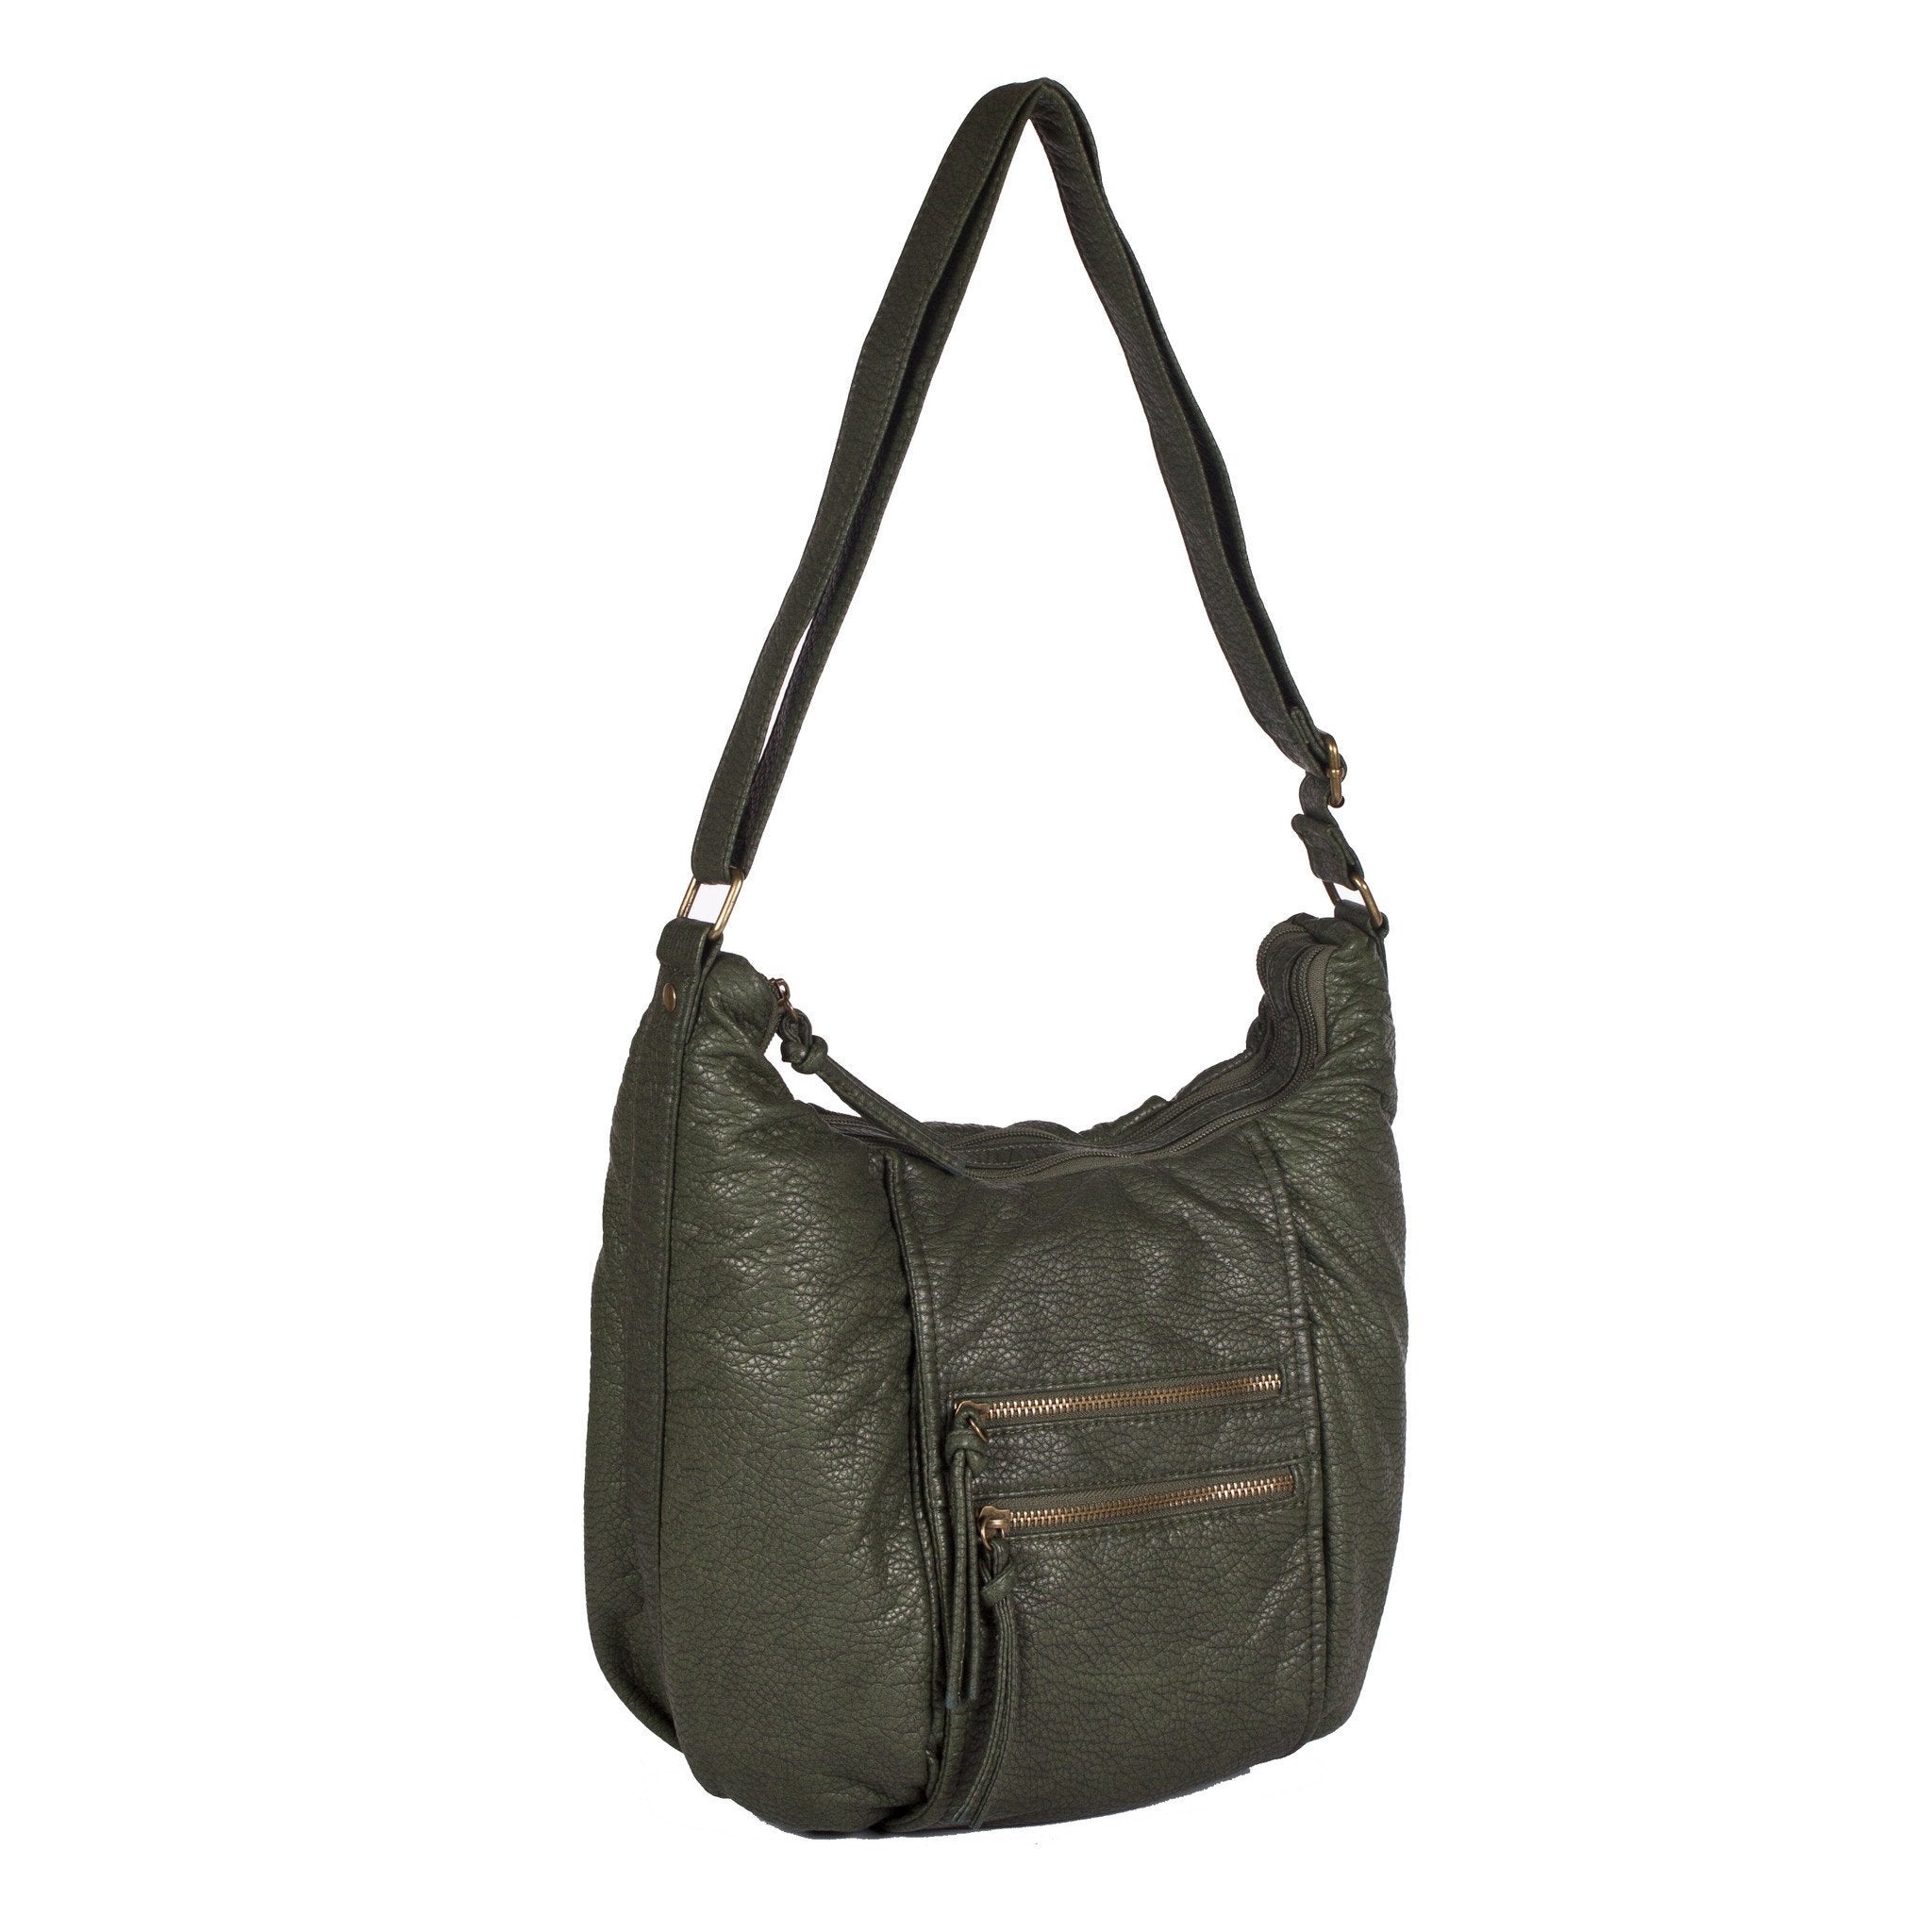 Bueno Purse Womens Gold Patent Leather Handbag | eBay